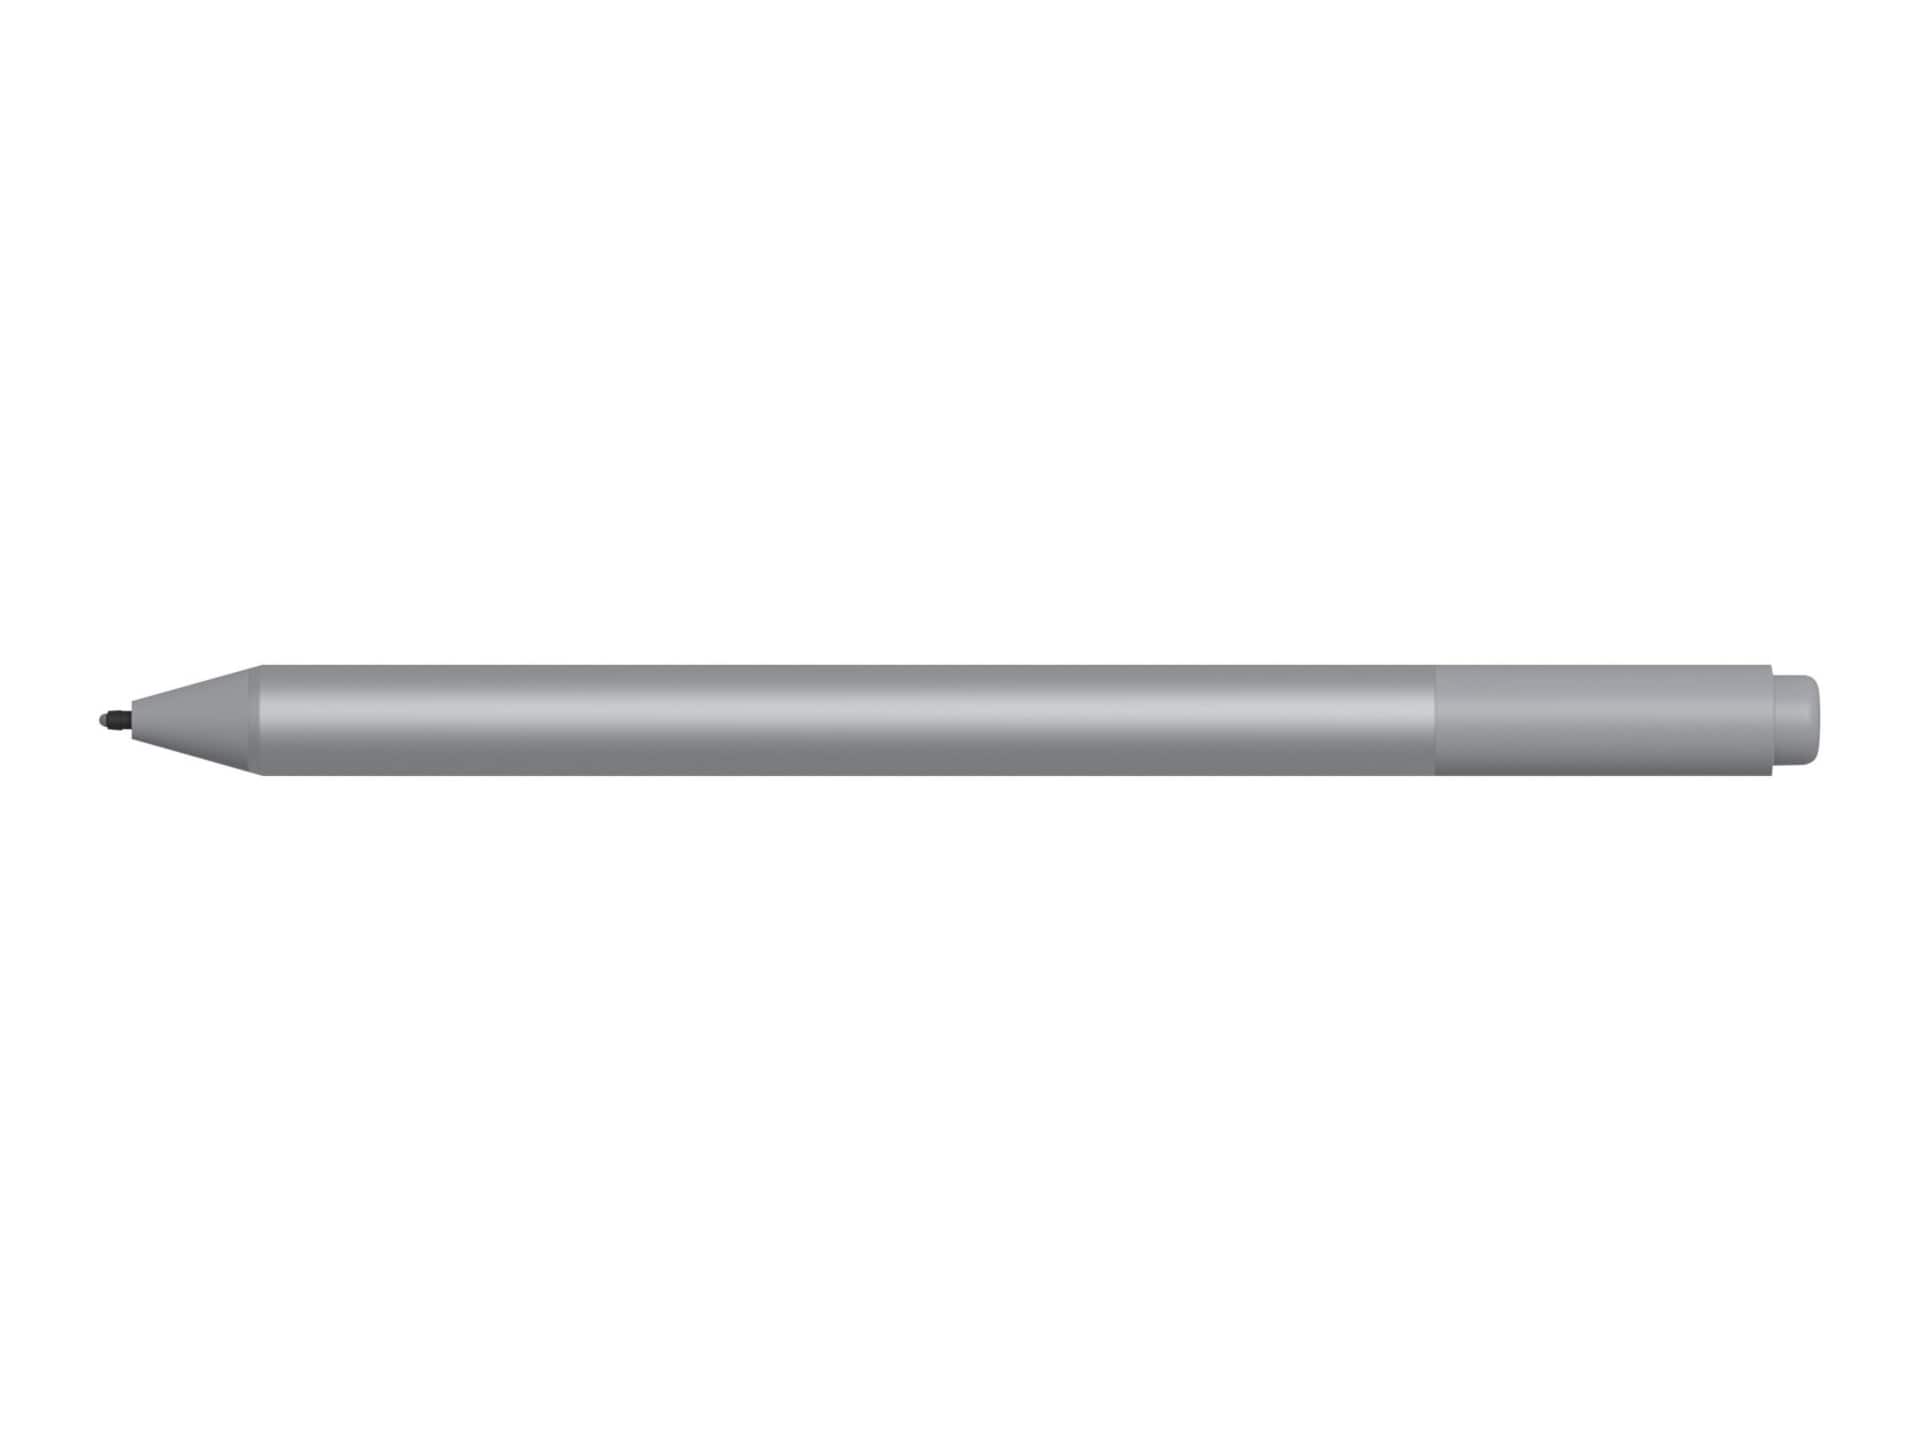 EYV-00009 - - 4.0 - Stylus Pen Bluetooth - M1776 Tablet Surface stylus active - Microsoft platinum